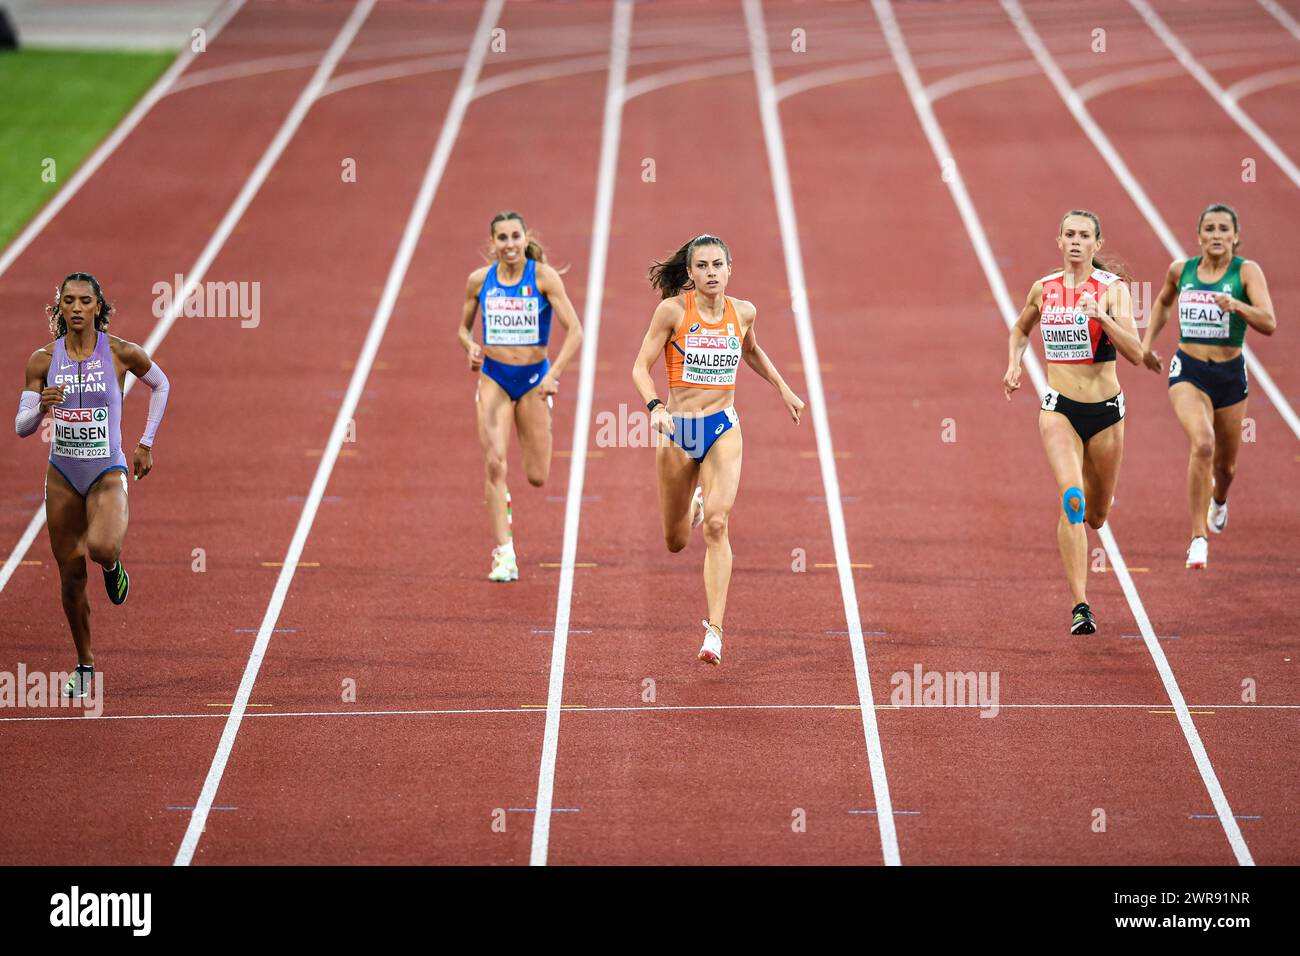 Eveline Saalberg (Paesi Bassi), Laviai Nielsen (Gran Bretagna). 400m riscaldatori. Campionato europeo di Monaco 2022 Foto Stock